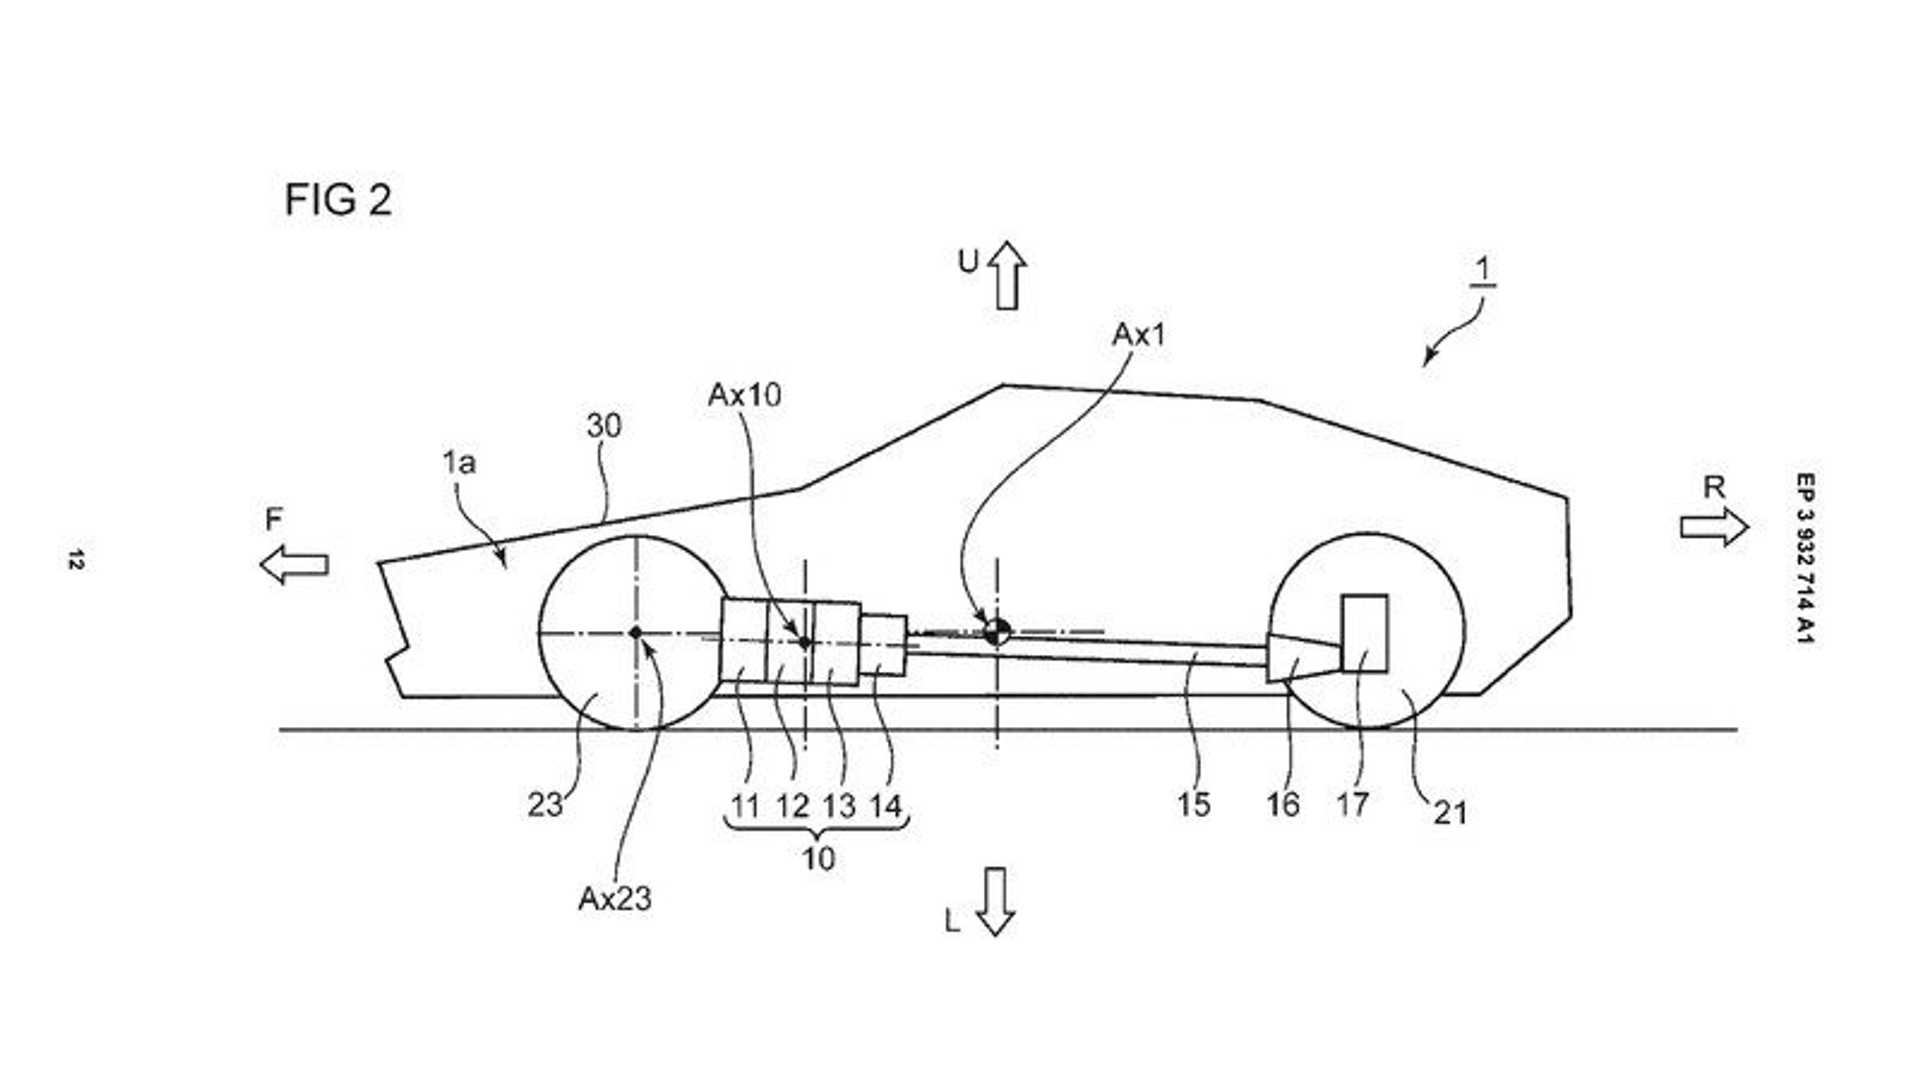 Mazda เข้าจดสิทธิบัตรรถยนต์ที่ใช้เครื่องยนต์ Rotary ร่วมกับเทคโนโลยี Hybrid